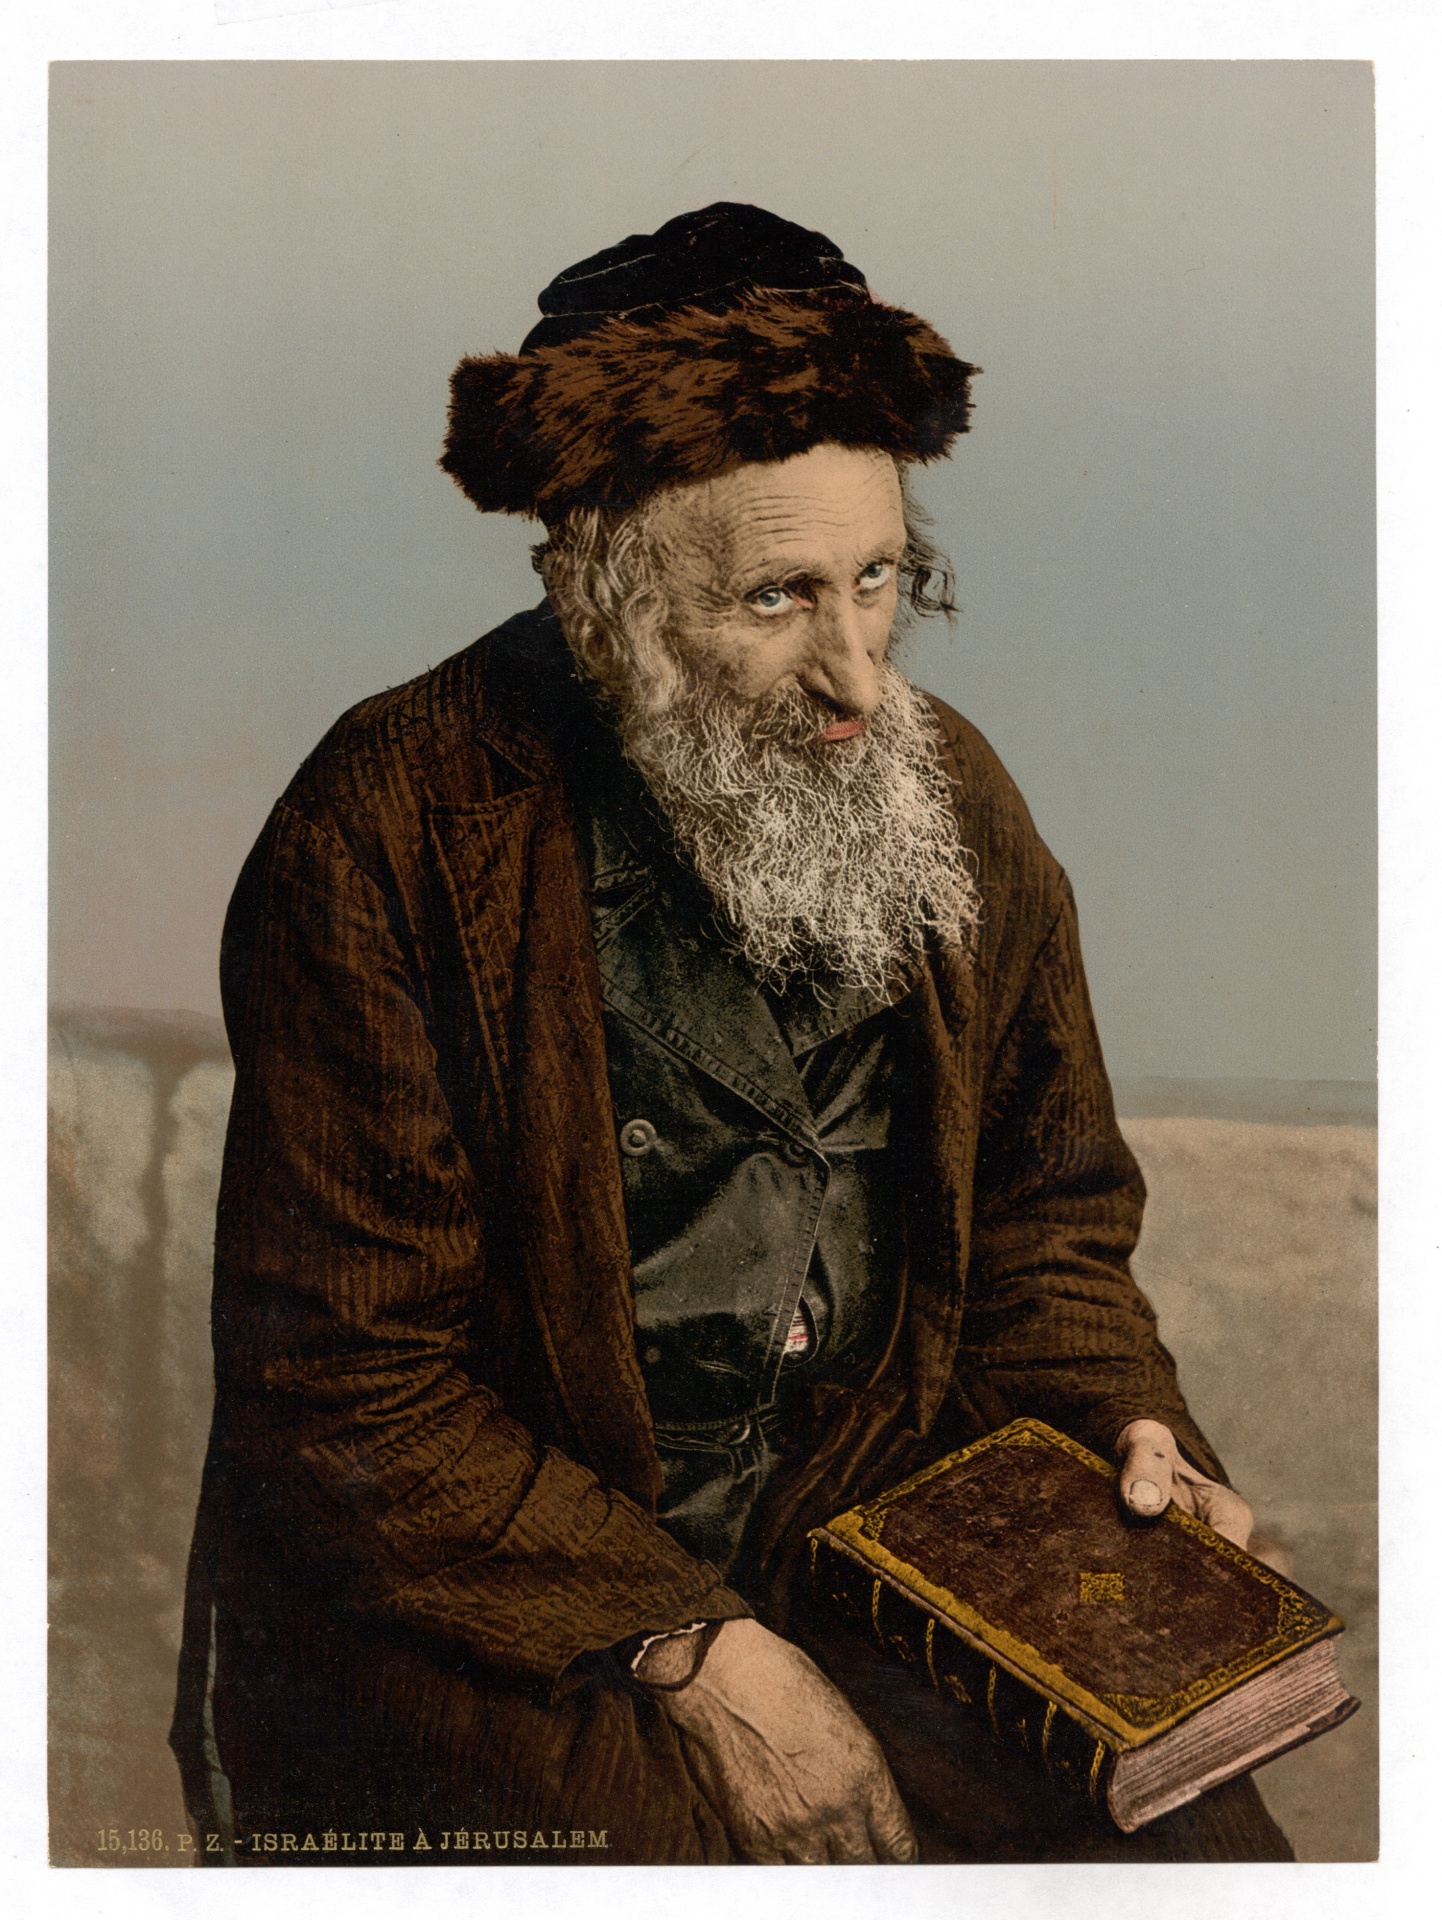 Old Man juive